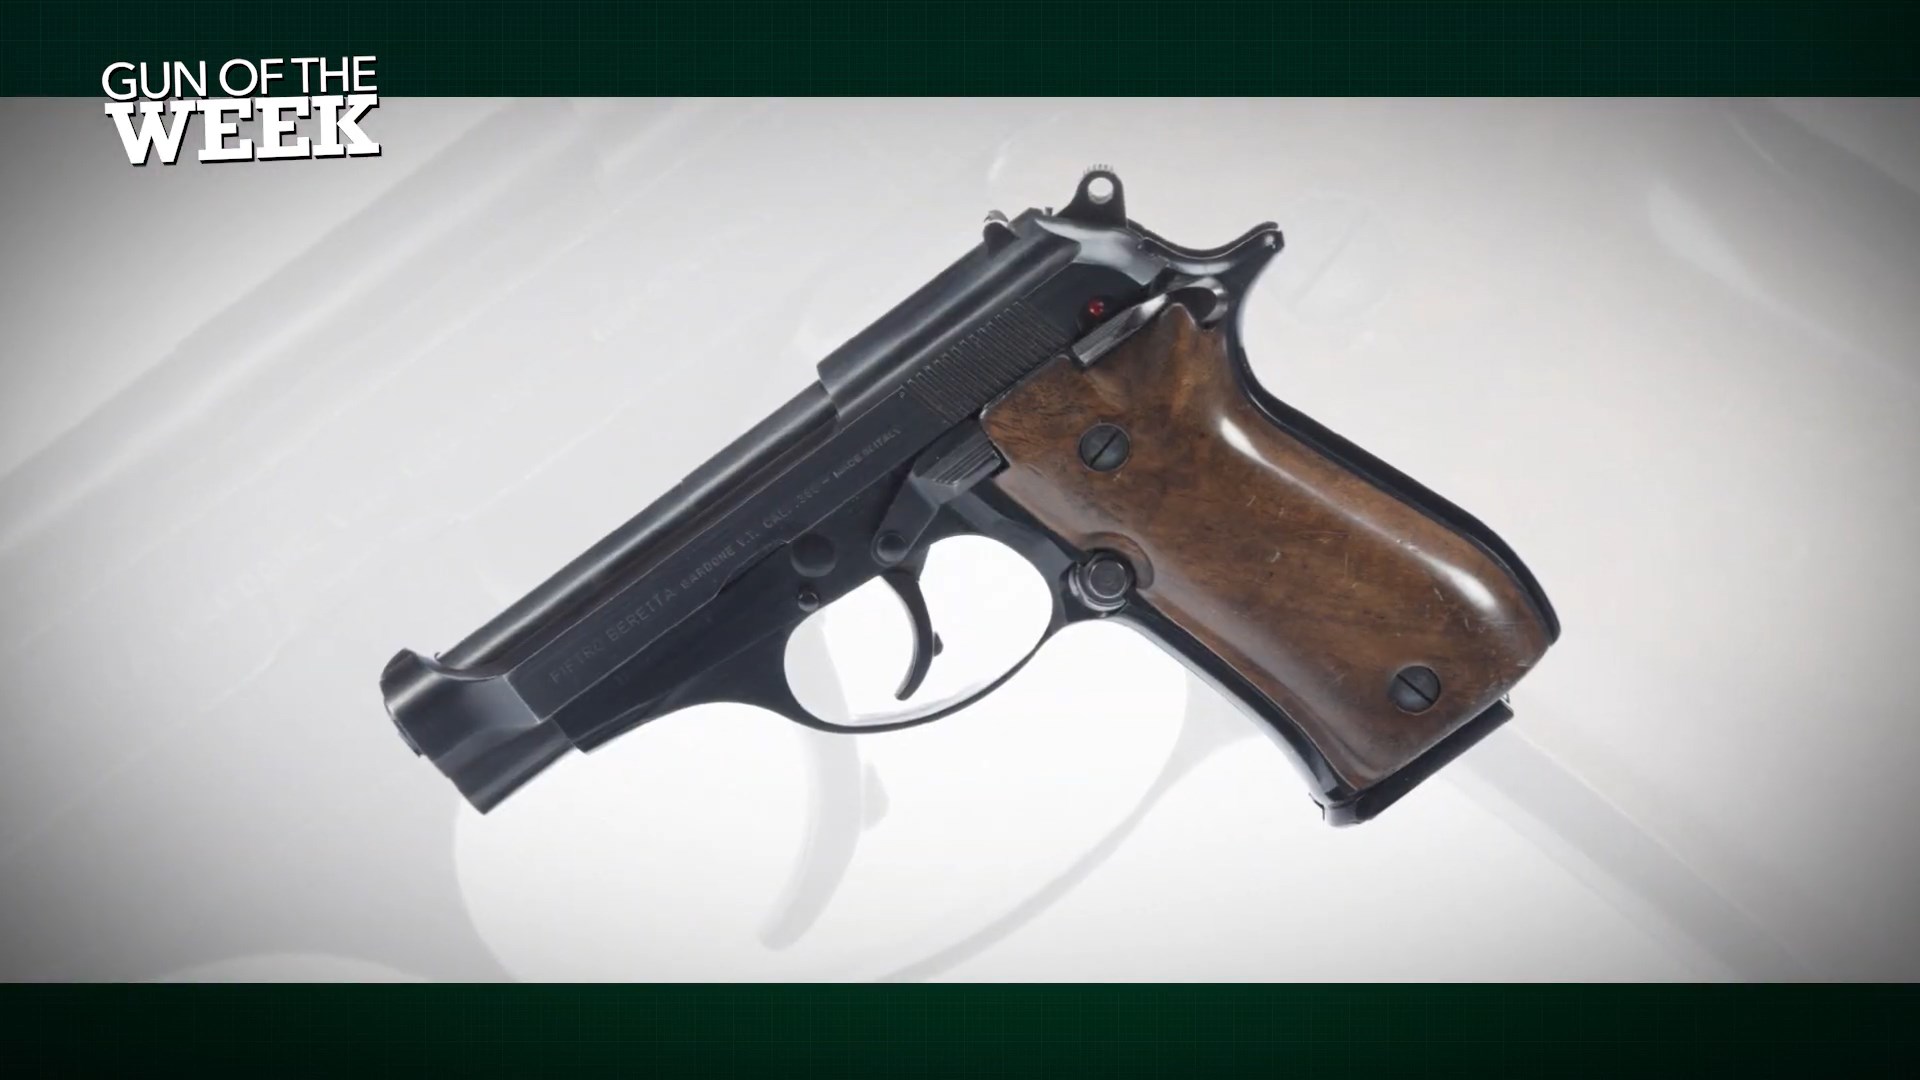 Beretta Cheetah pistol GUN OF THE WEEK text on image overlay